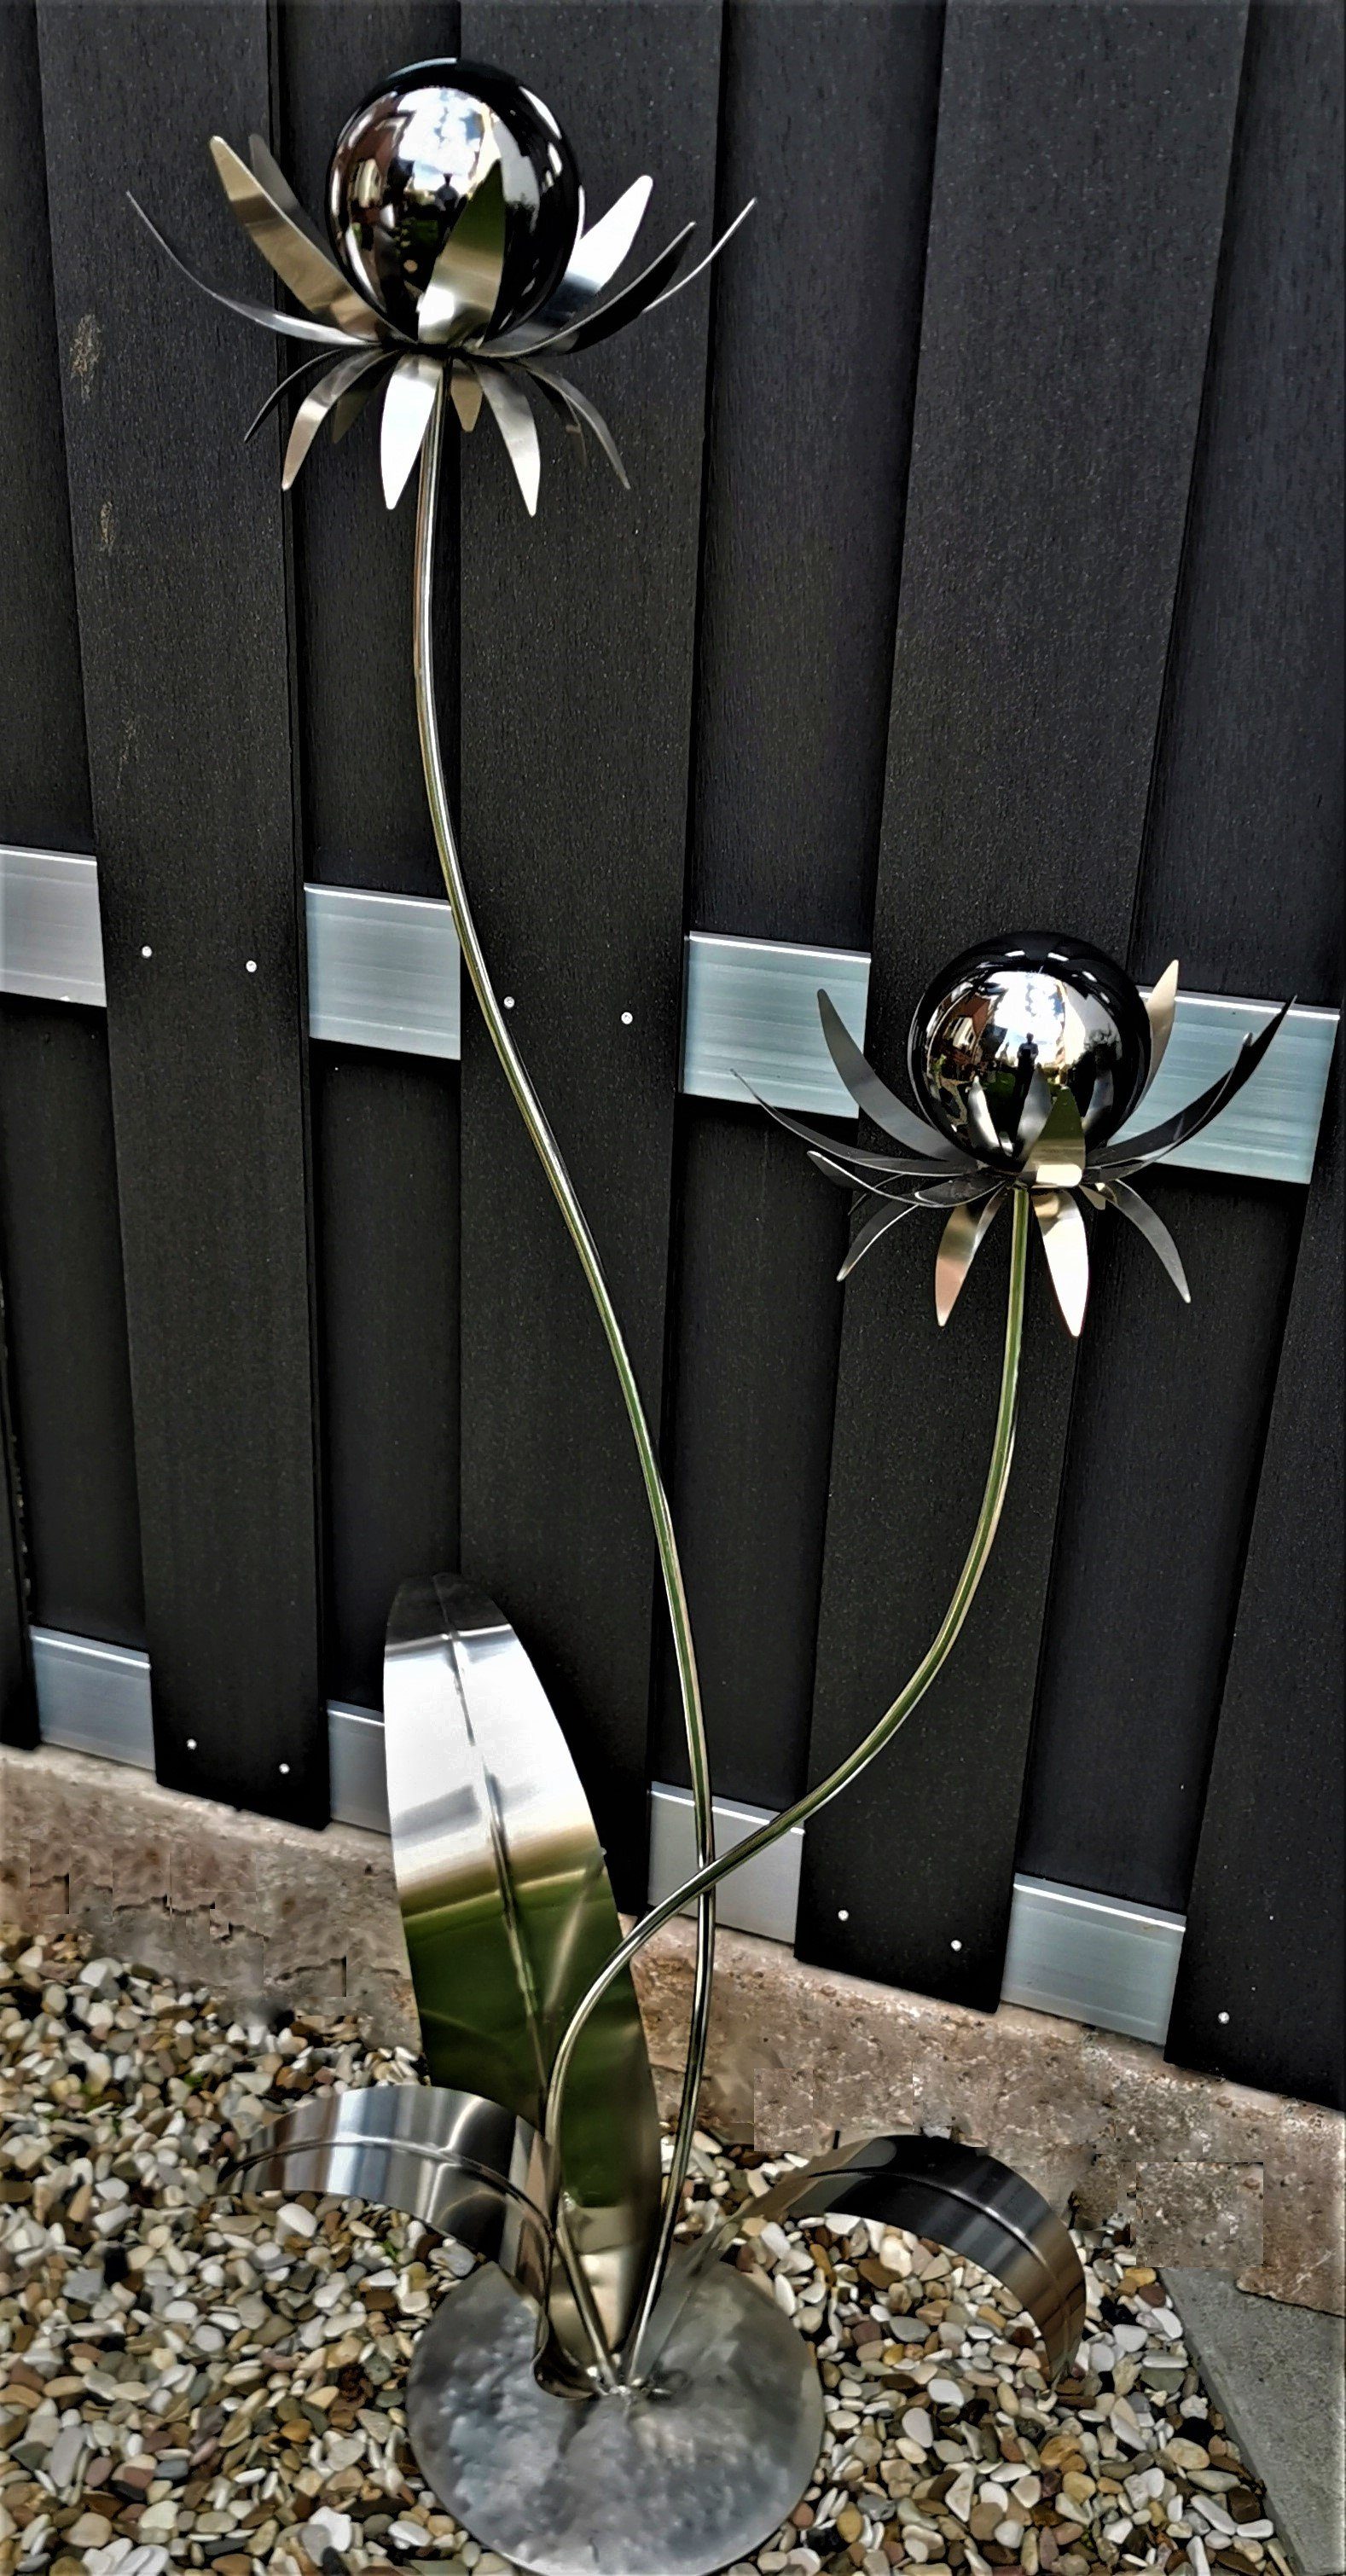 Jürgen Bocker Garten-Ambiente Gartenstecker Skulptur Blume Milano Edelstahl 120 cm Kugel Edelstahl schwarz poliert Standfuß Gartendeko